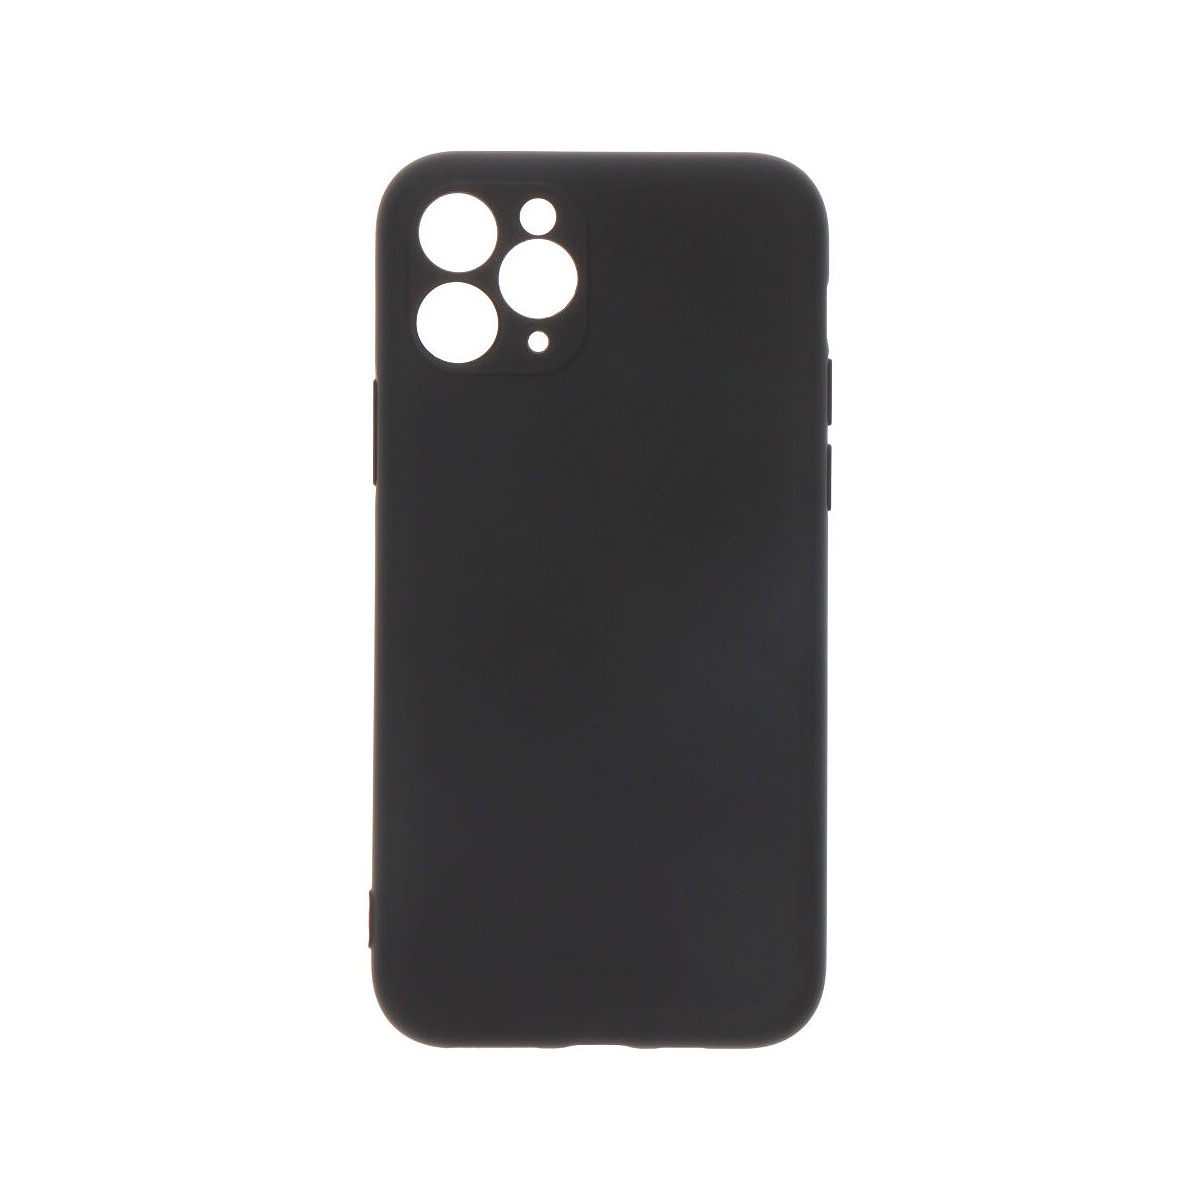 Carcasa negra de plástico soft touch para iphone 11 pro